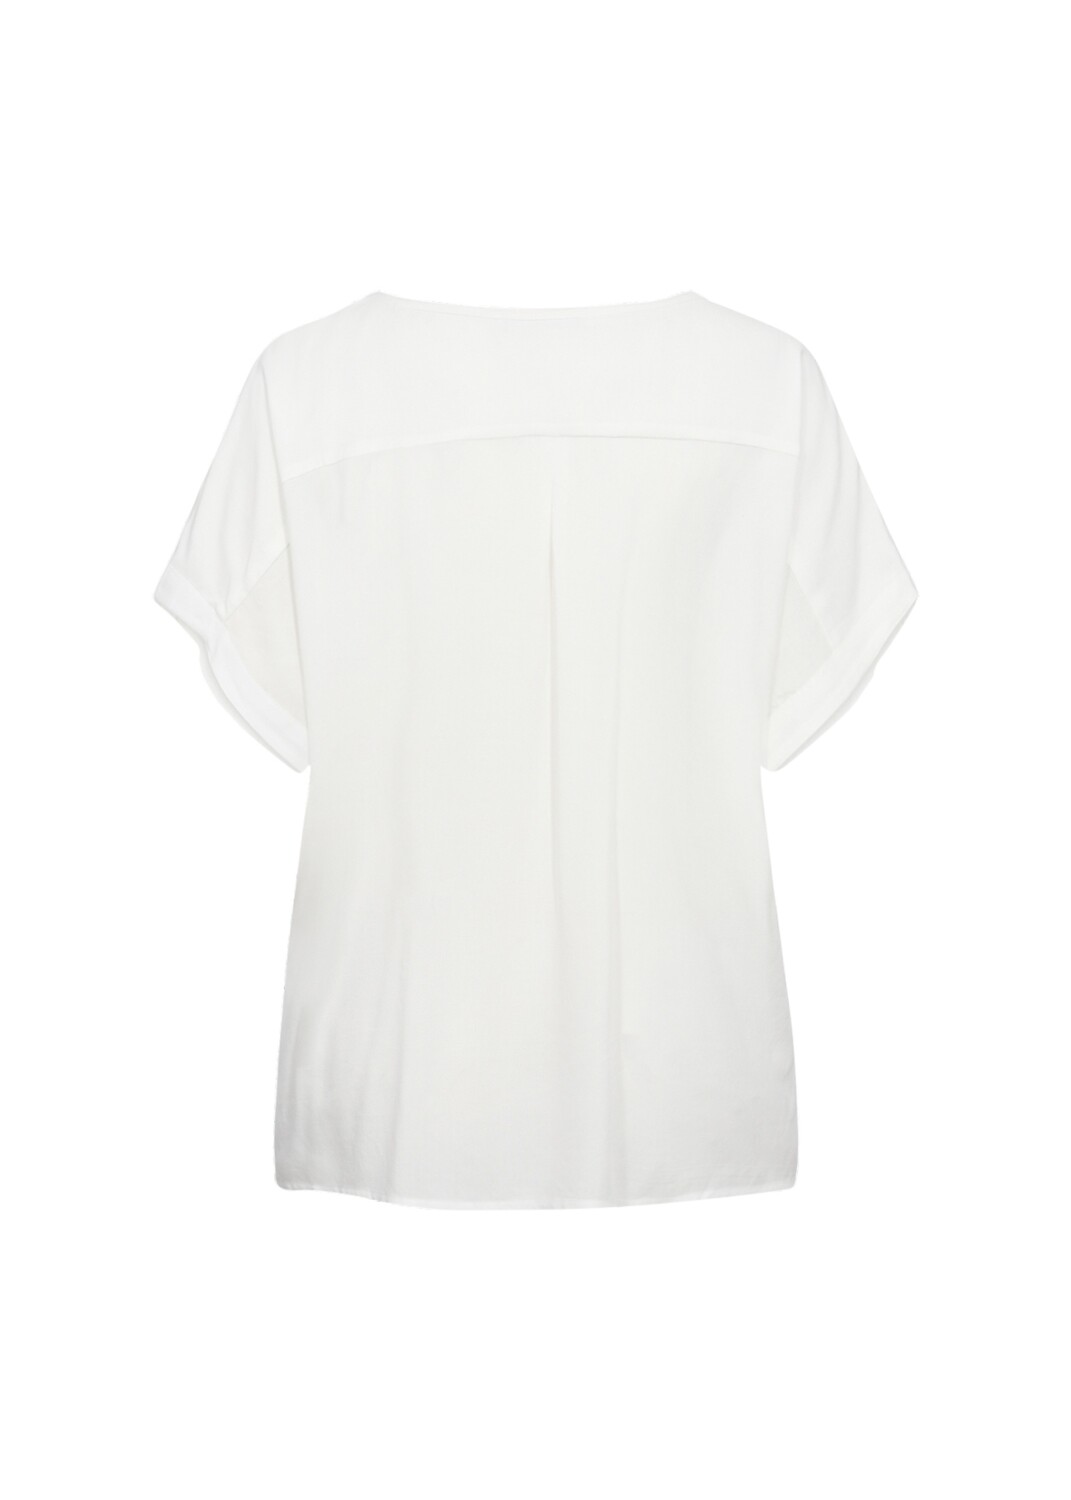 Wasabi blouse ecru Sia1 w10023, Size: 1 (42-44 )